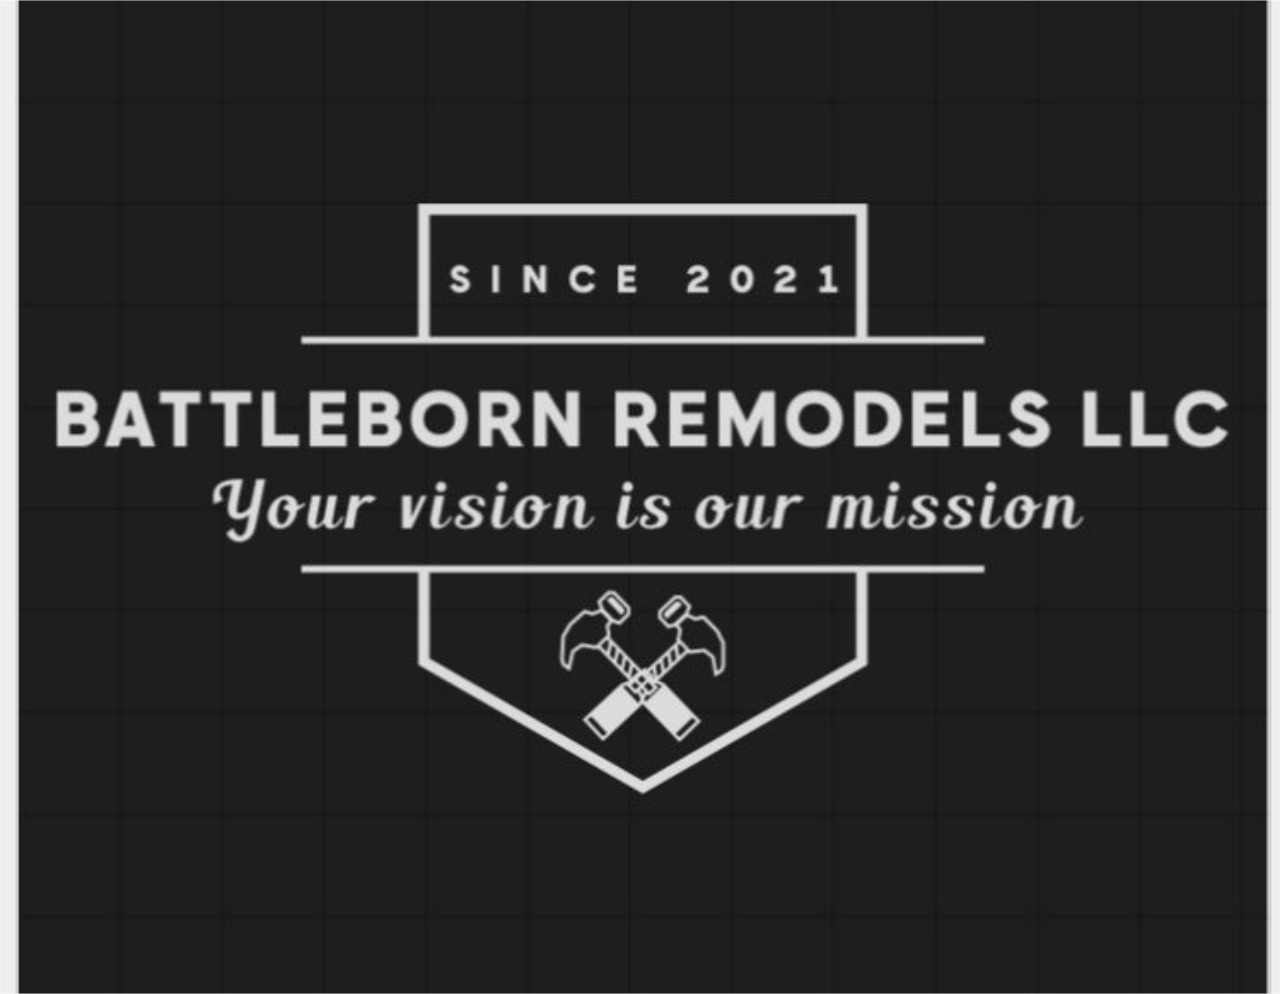 BATTLEBORN REMODELS LLC's web page